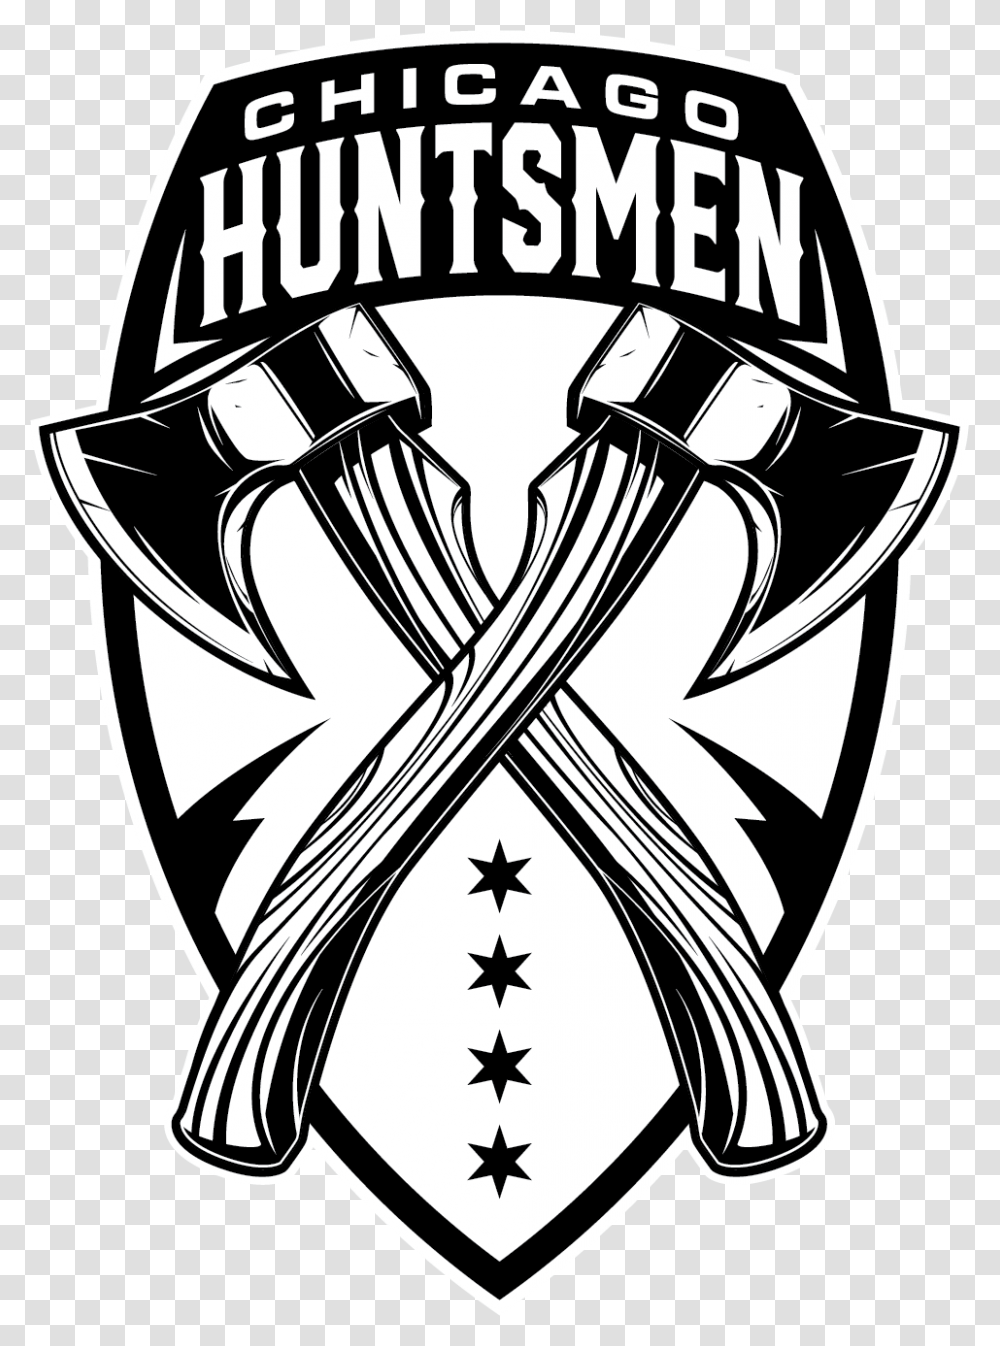 Chicago Huntsmen Iphone, Tool, Axe Transparent Png